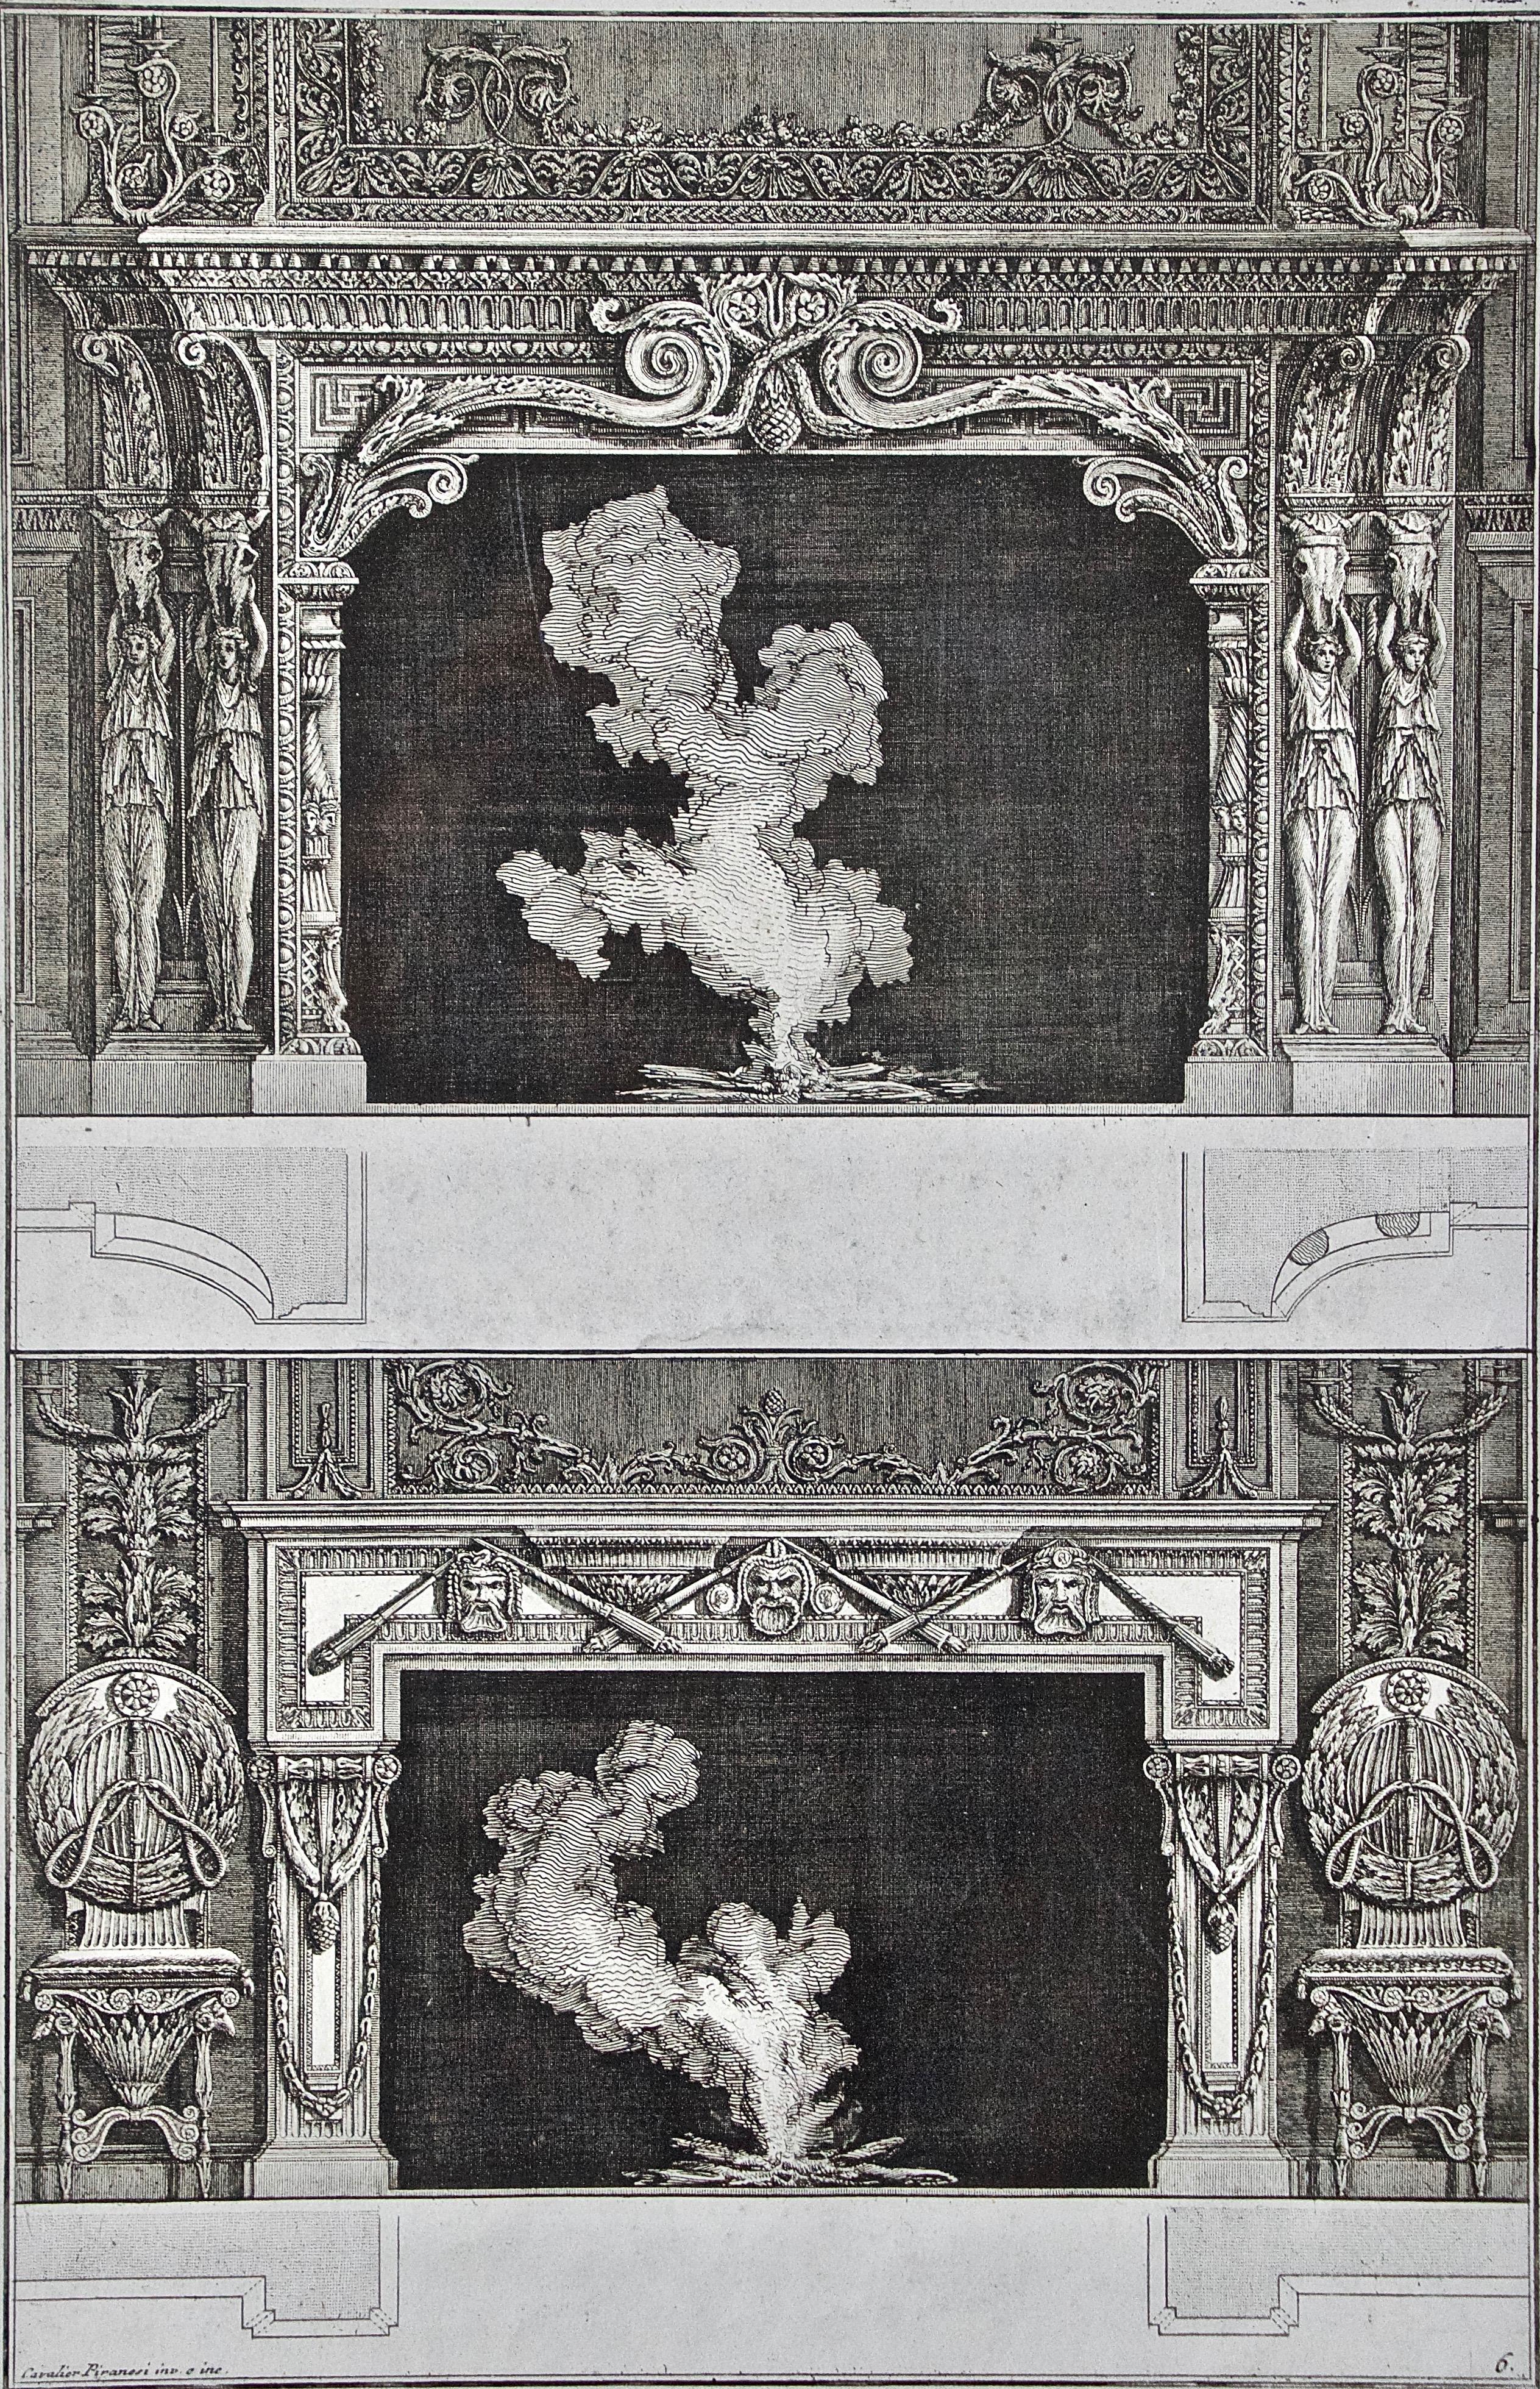 18th C. Piranesi Fireplace Designs based on Ancient Architectural Styles - Print by Giovanni Battista Piranesi